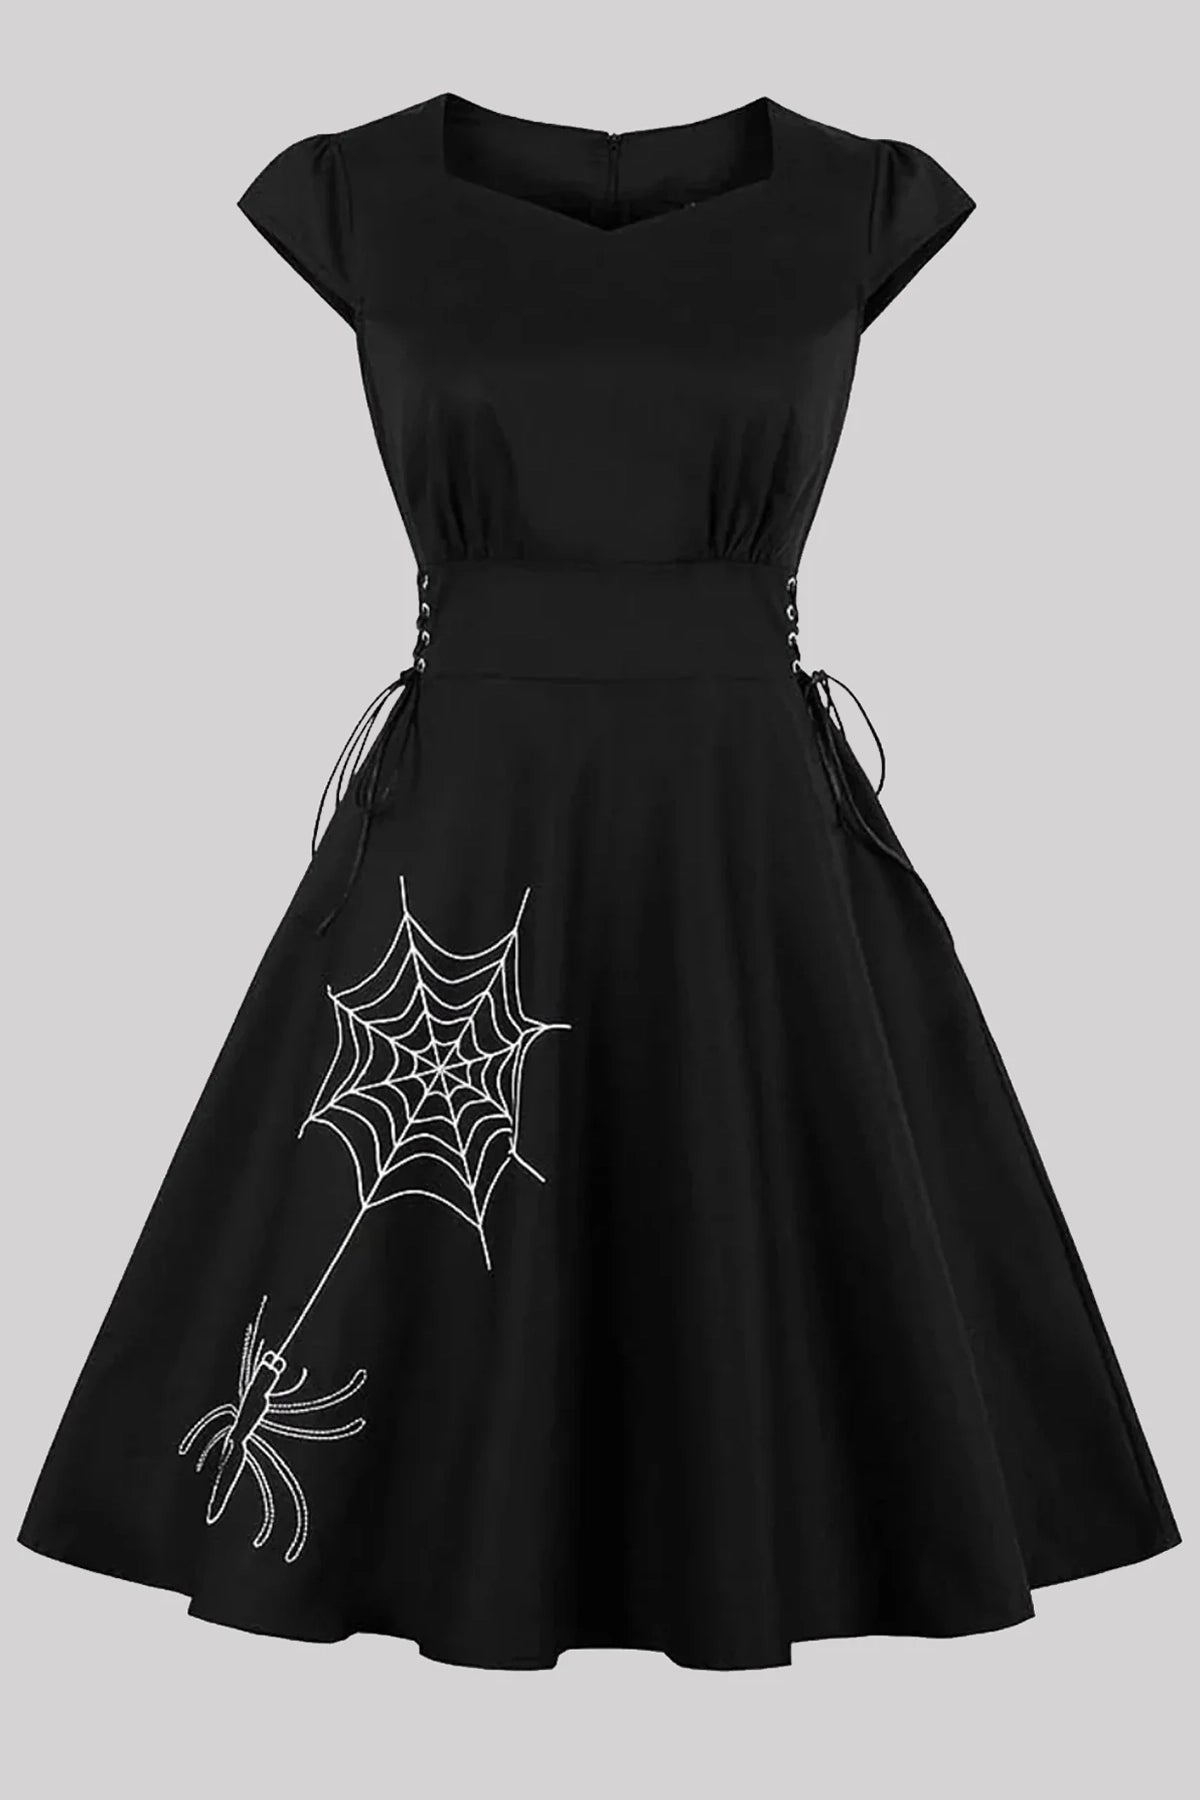 Ro Rox Charlotte Gothic Rockabilly Spider Web Swing Dress